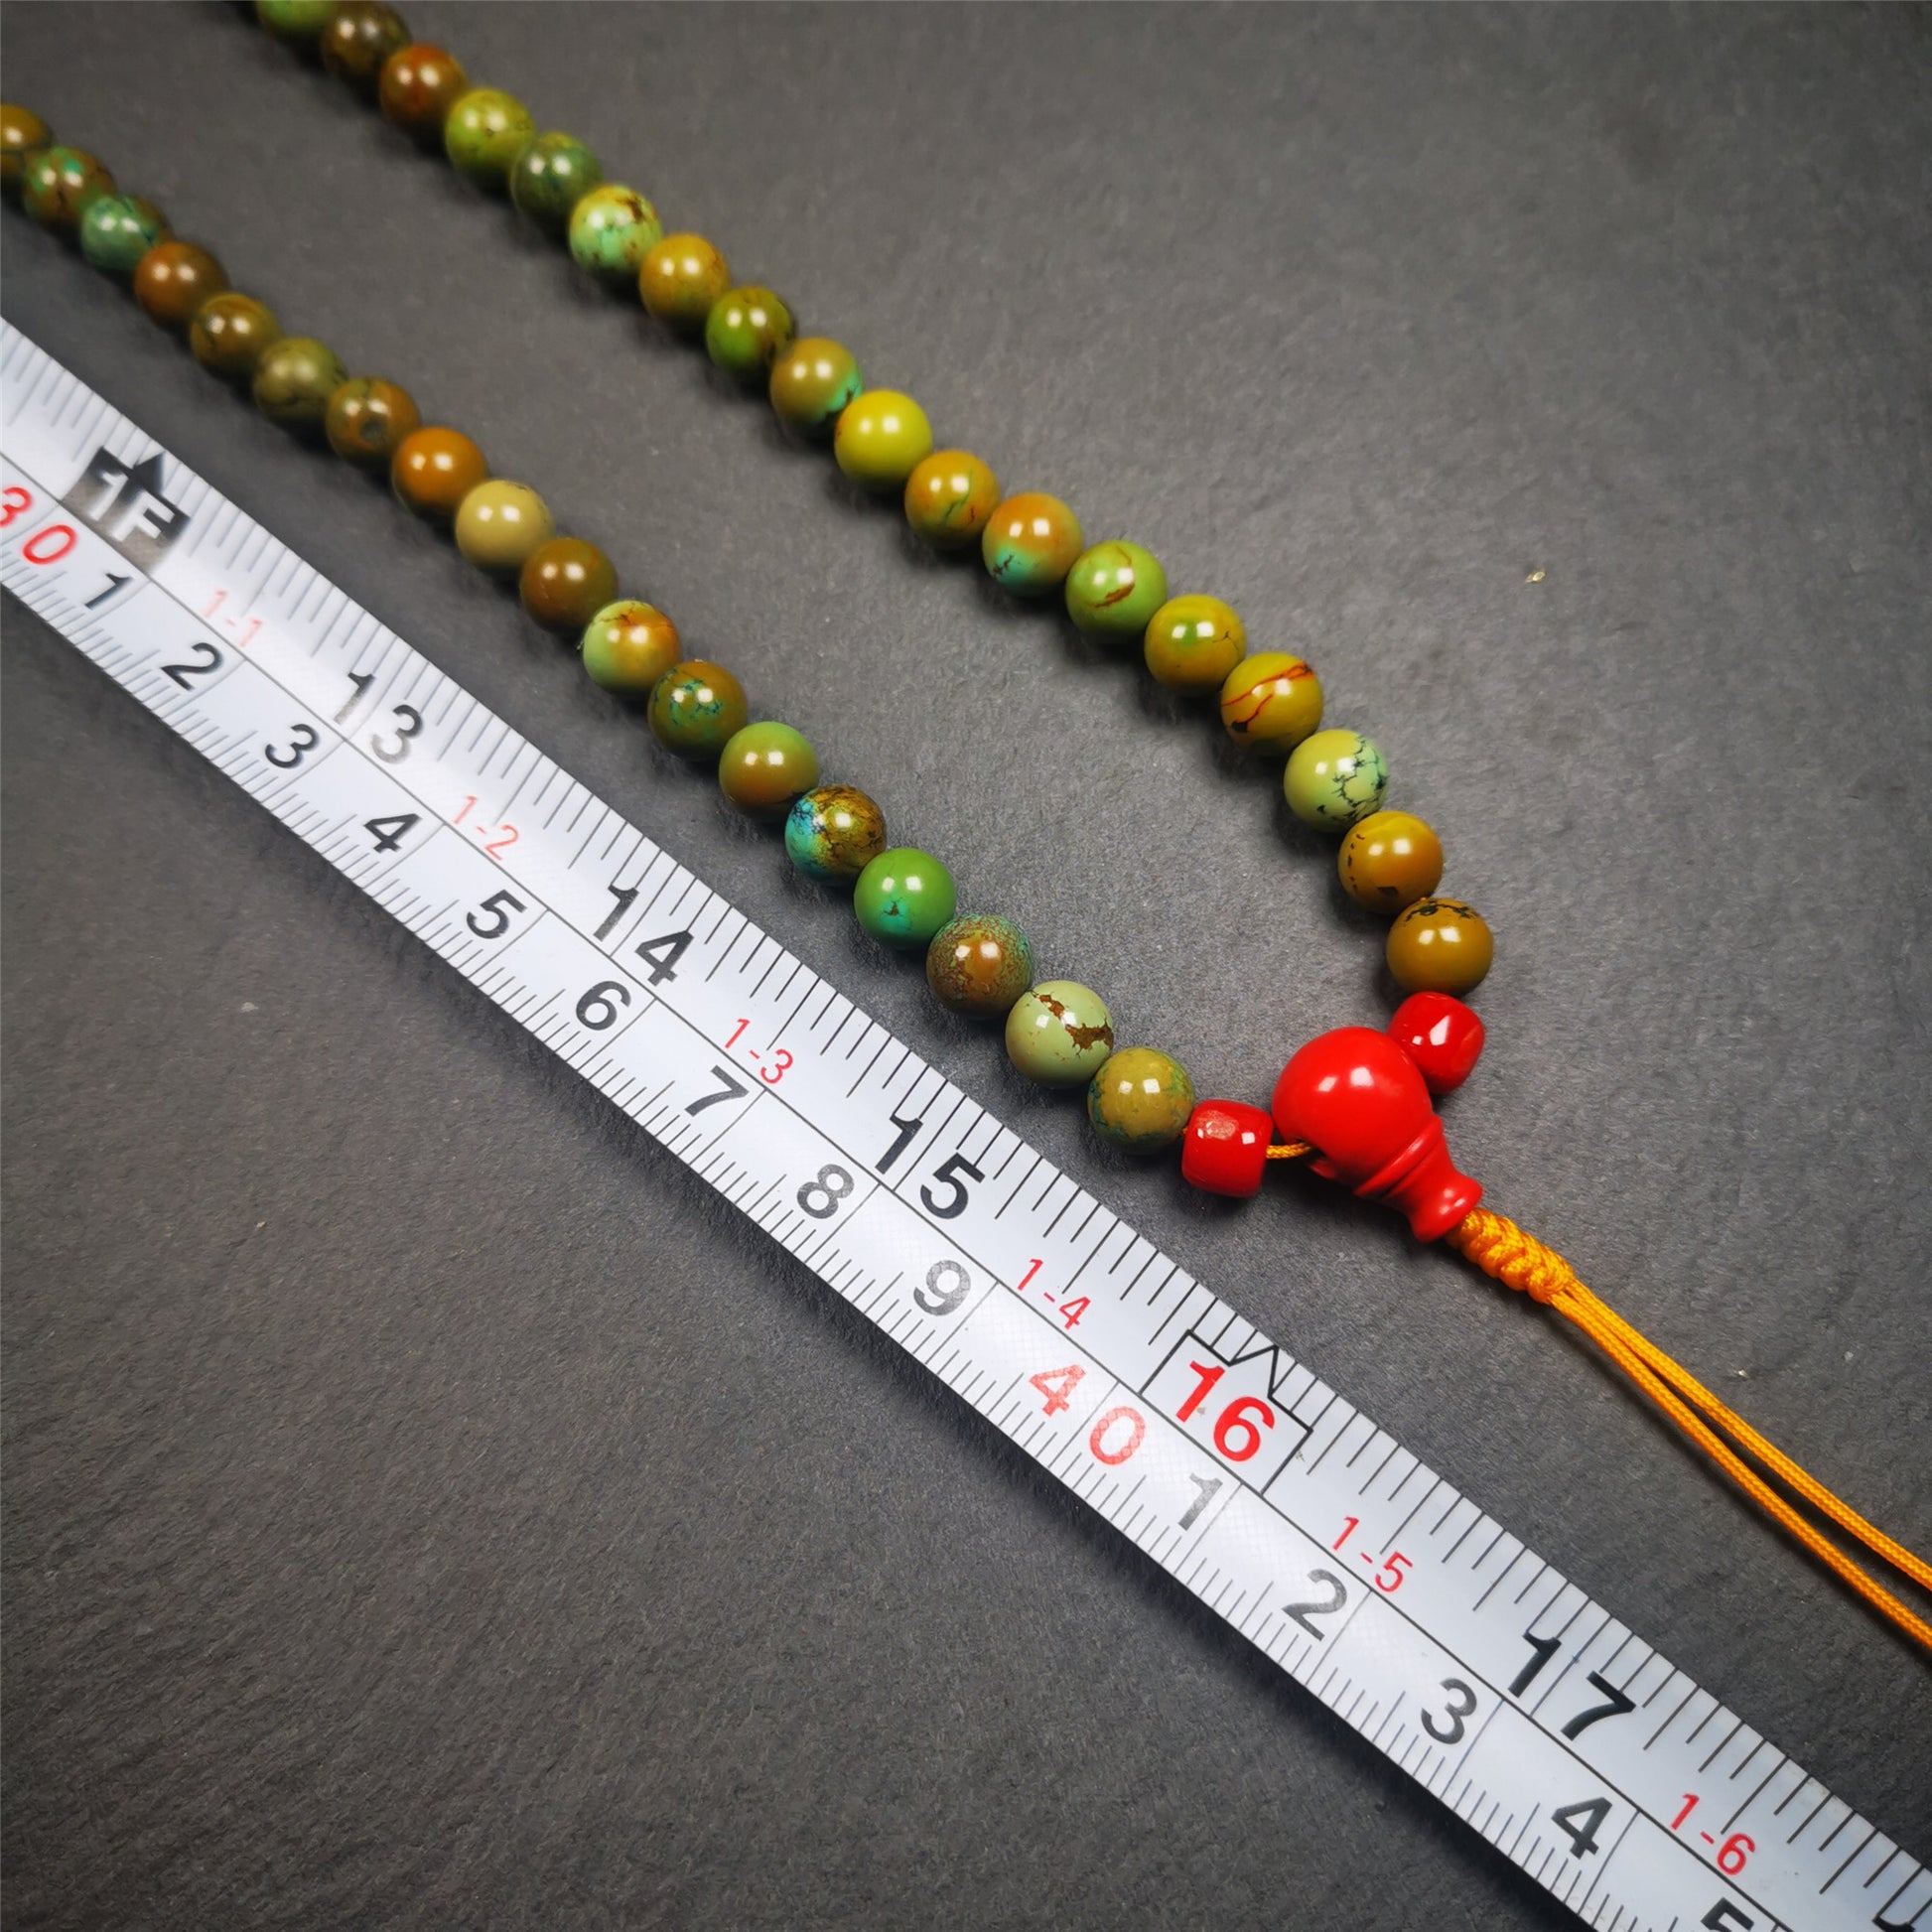 Gandhanra Old 108 Turquoise Beads Mala,Tibetan Prayer Beads for Meditation,Diameter 0.28", Circumference 32 inches